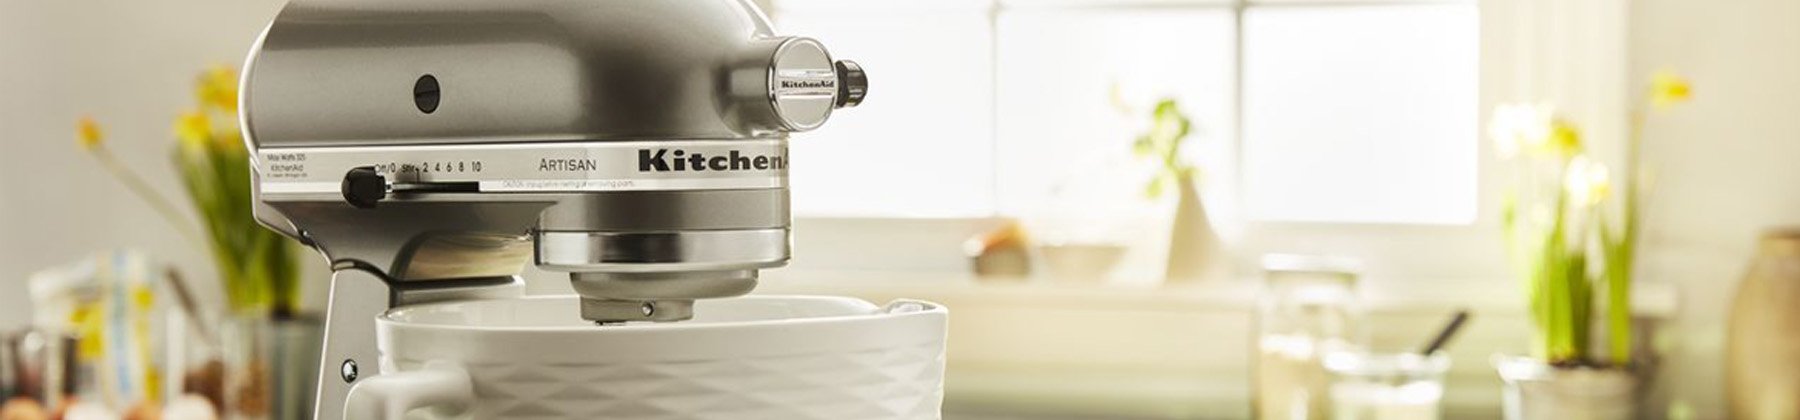 Photo of KitchenAid mixer.